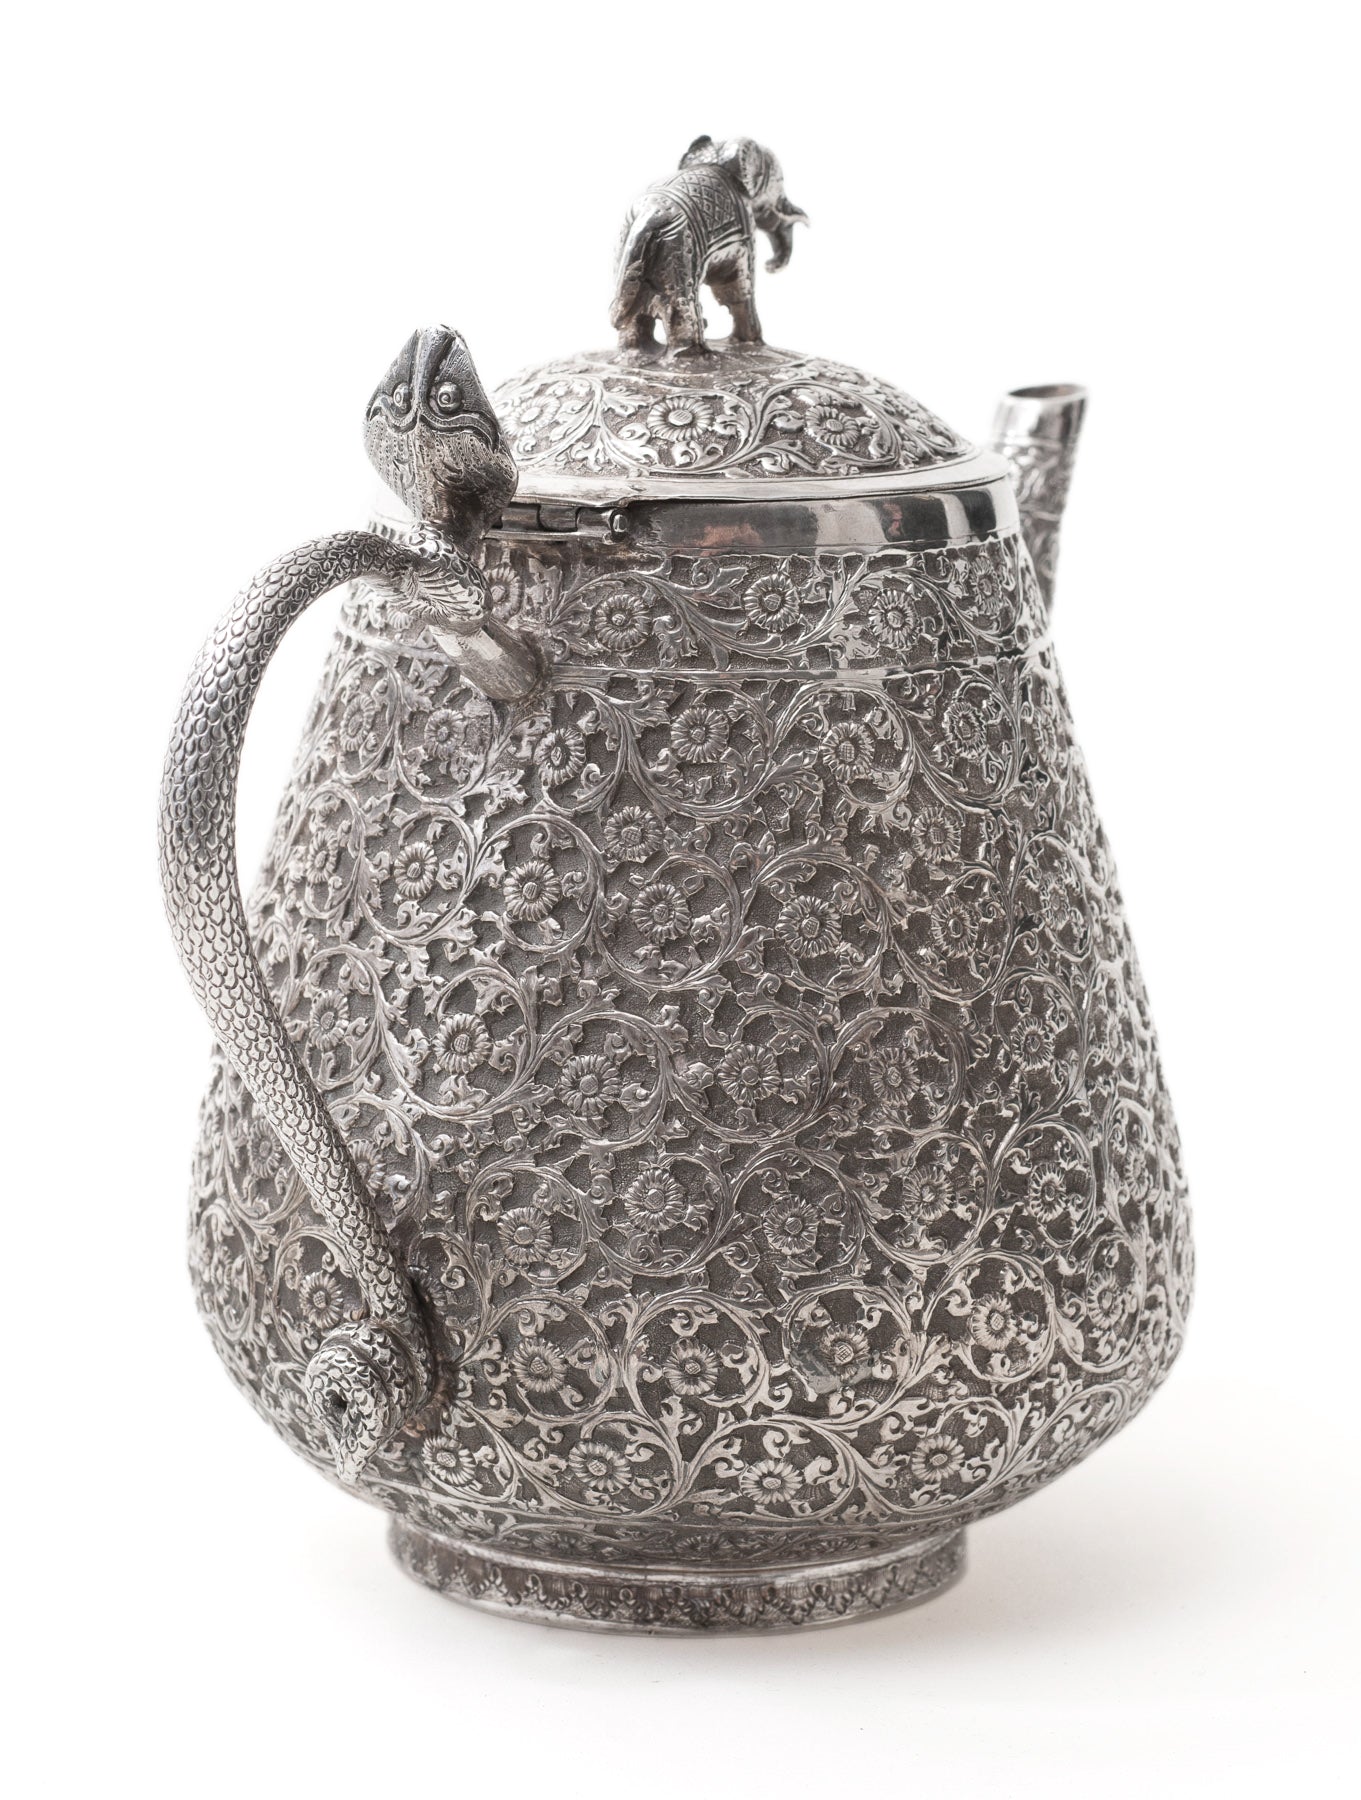 Fine Antique Indian Kutch Silver Tea Set with Elephant and Cobra Design c1850 (Code 0567)